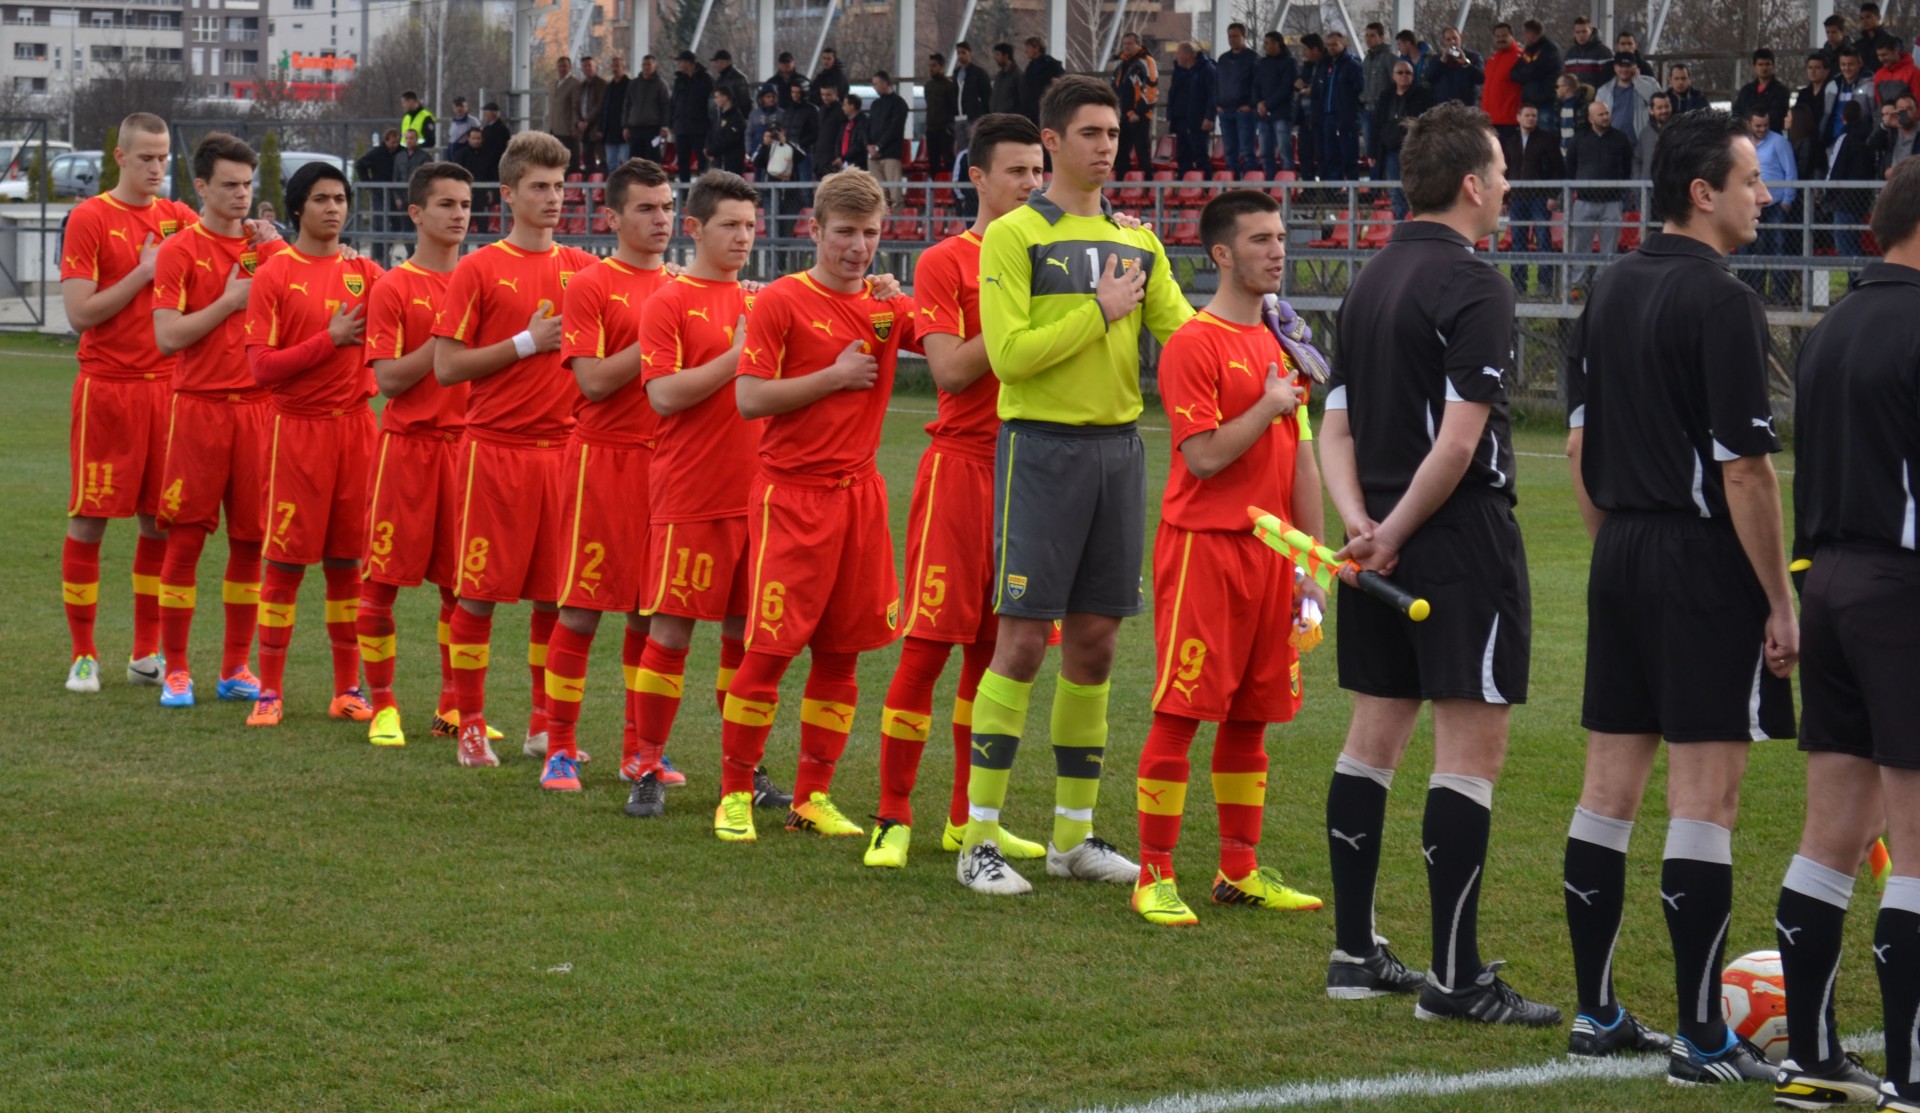 U18: Two friendly games against Romania